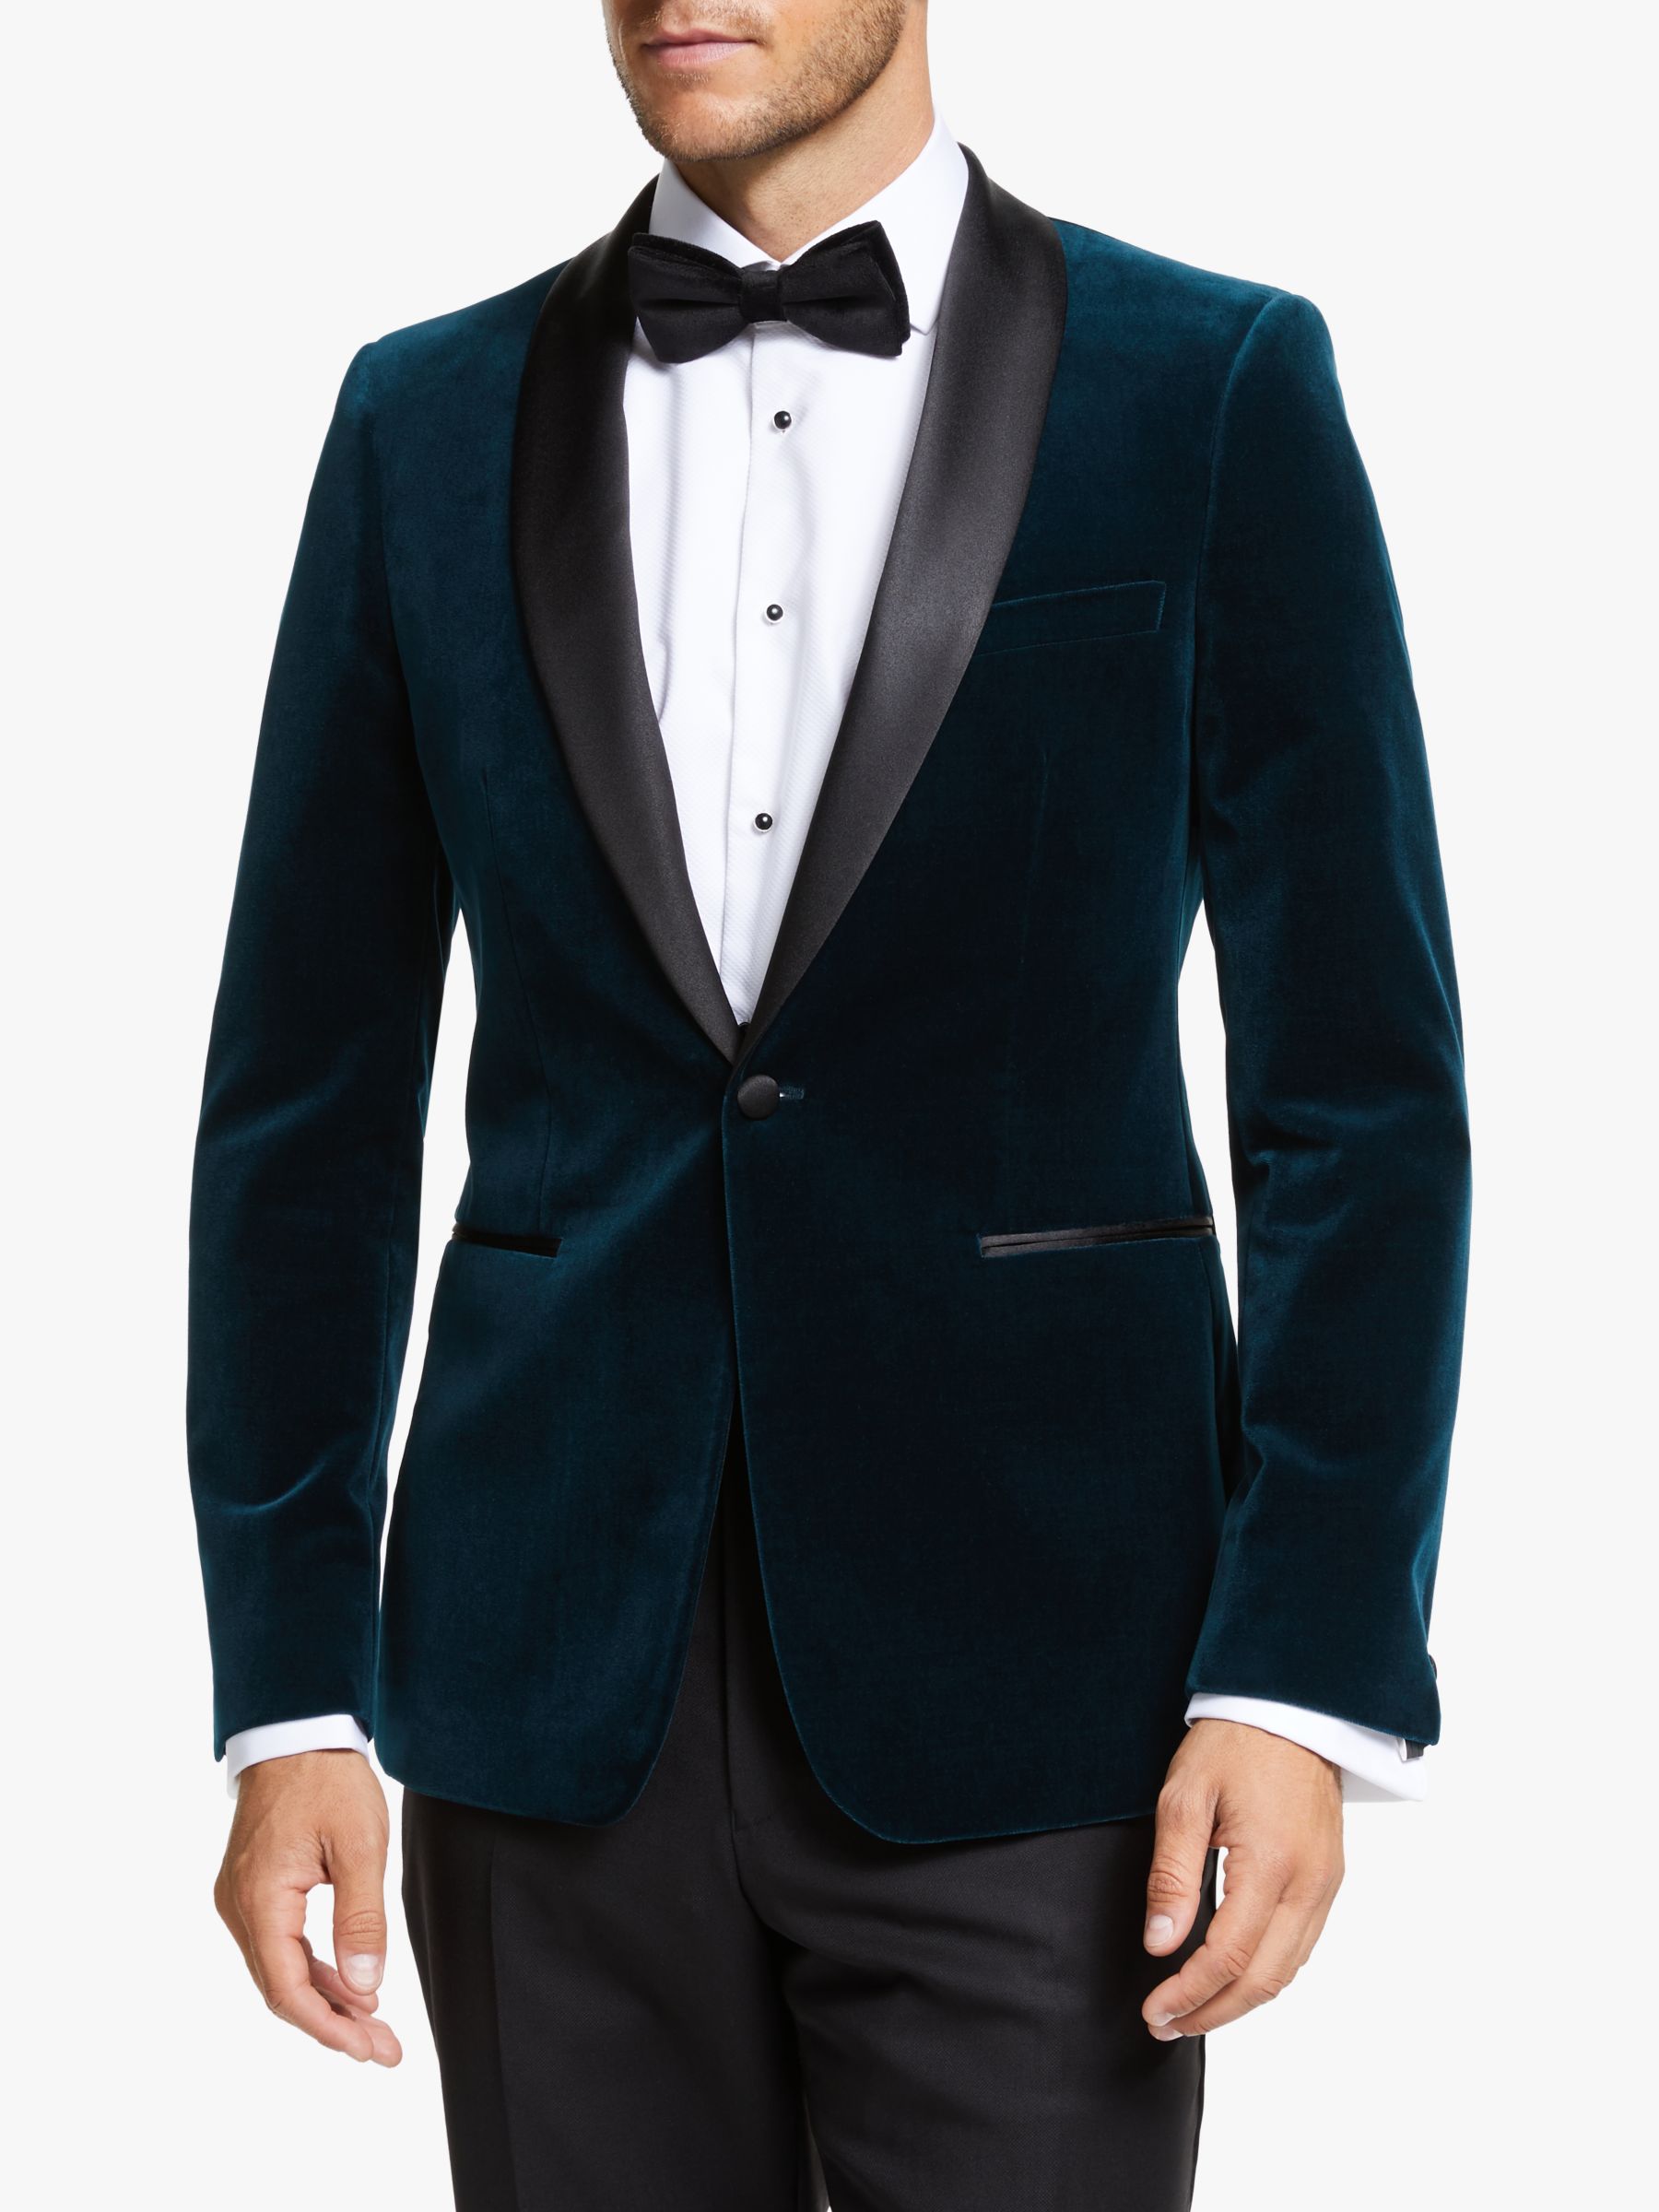 John Lewis & Partners Italian Velvet Shawl Lapel Slim Fit Dress Suit Jacket, Teal